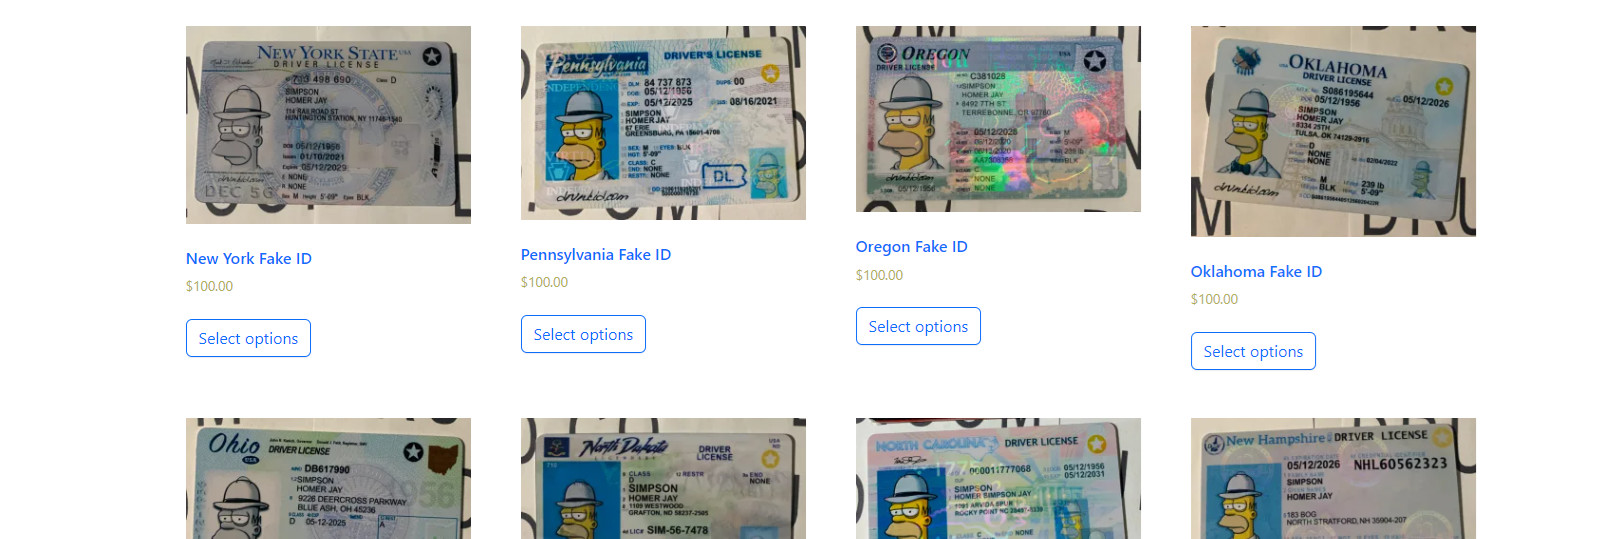 best fake id websites